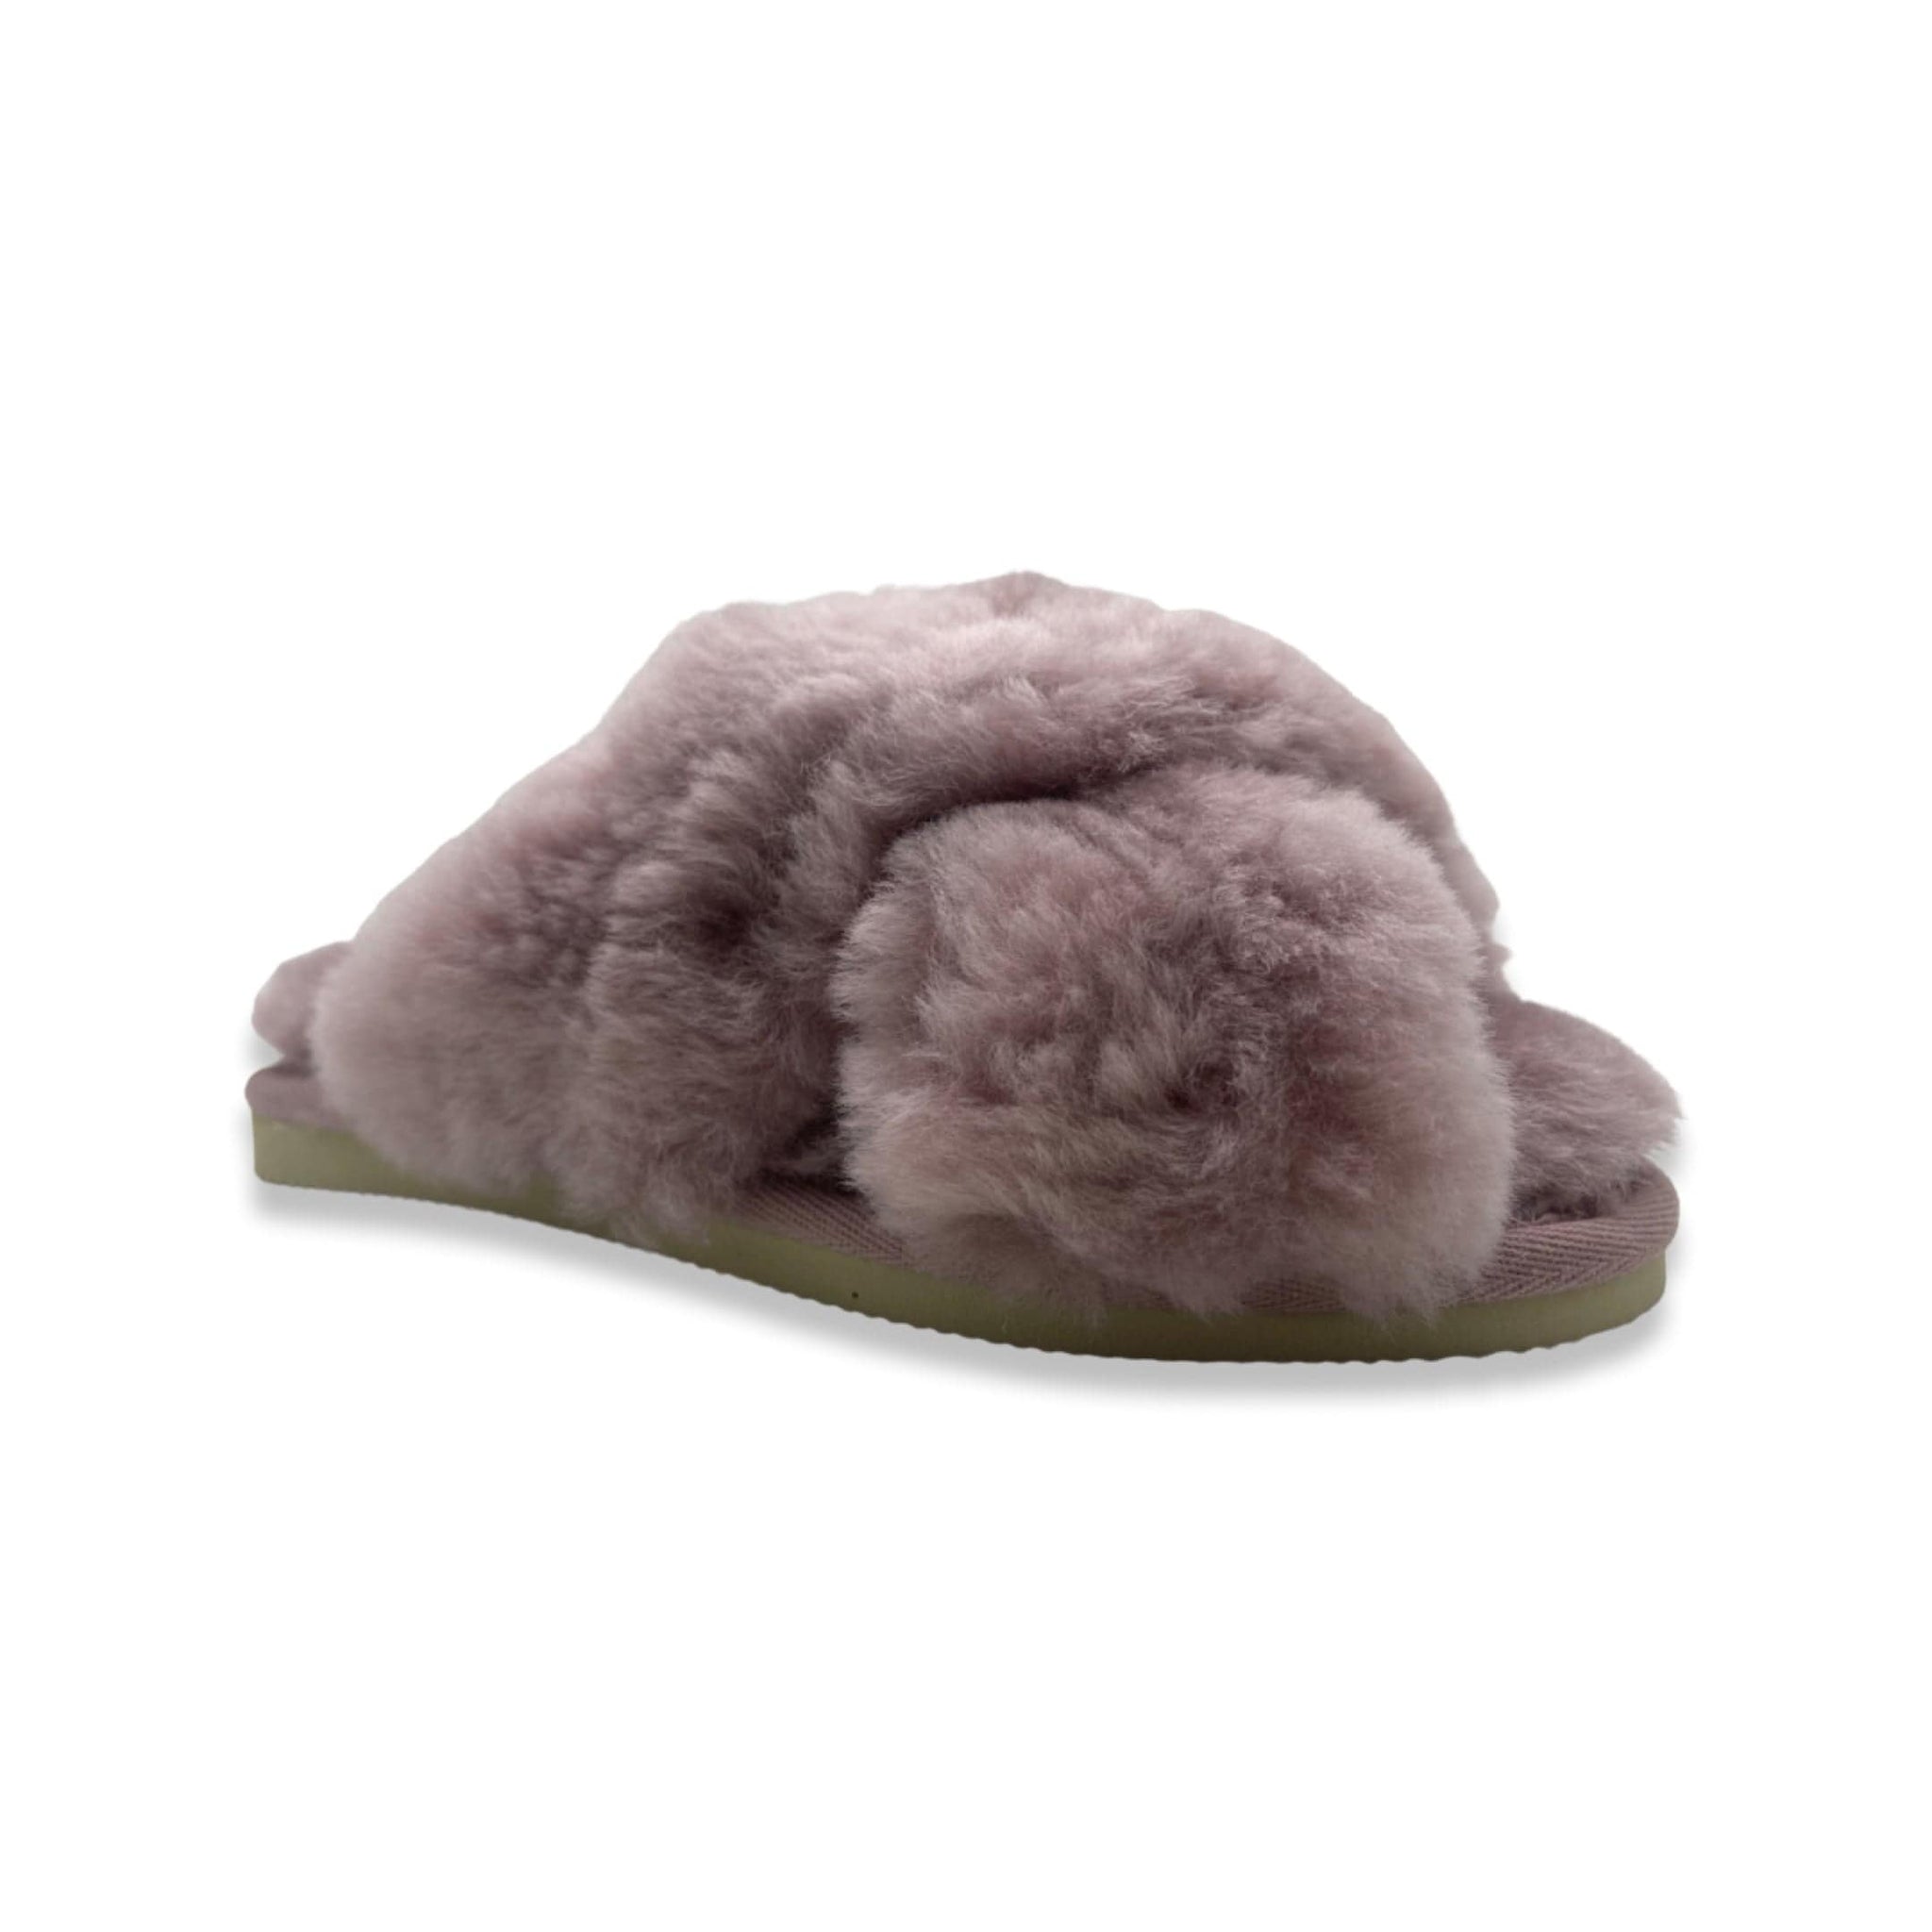 NAT 2 calzado thies 1856 ® Sheep Cross Sandal new pink (W) moda sostenible moda ética